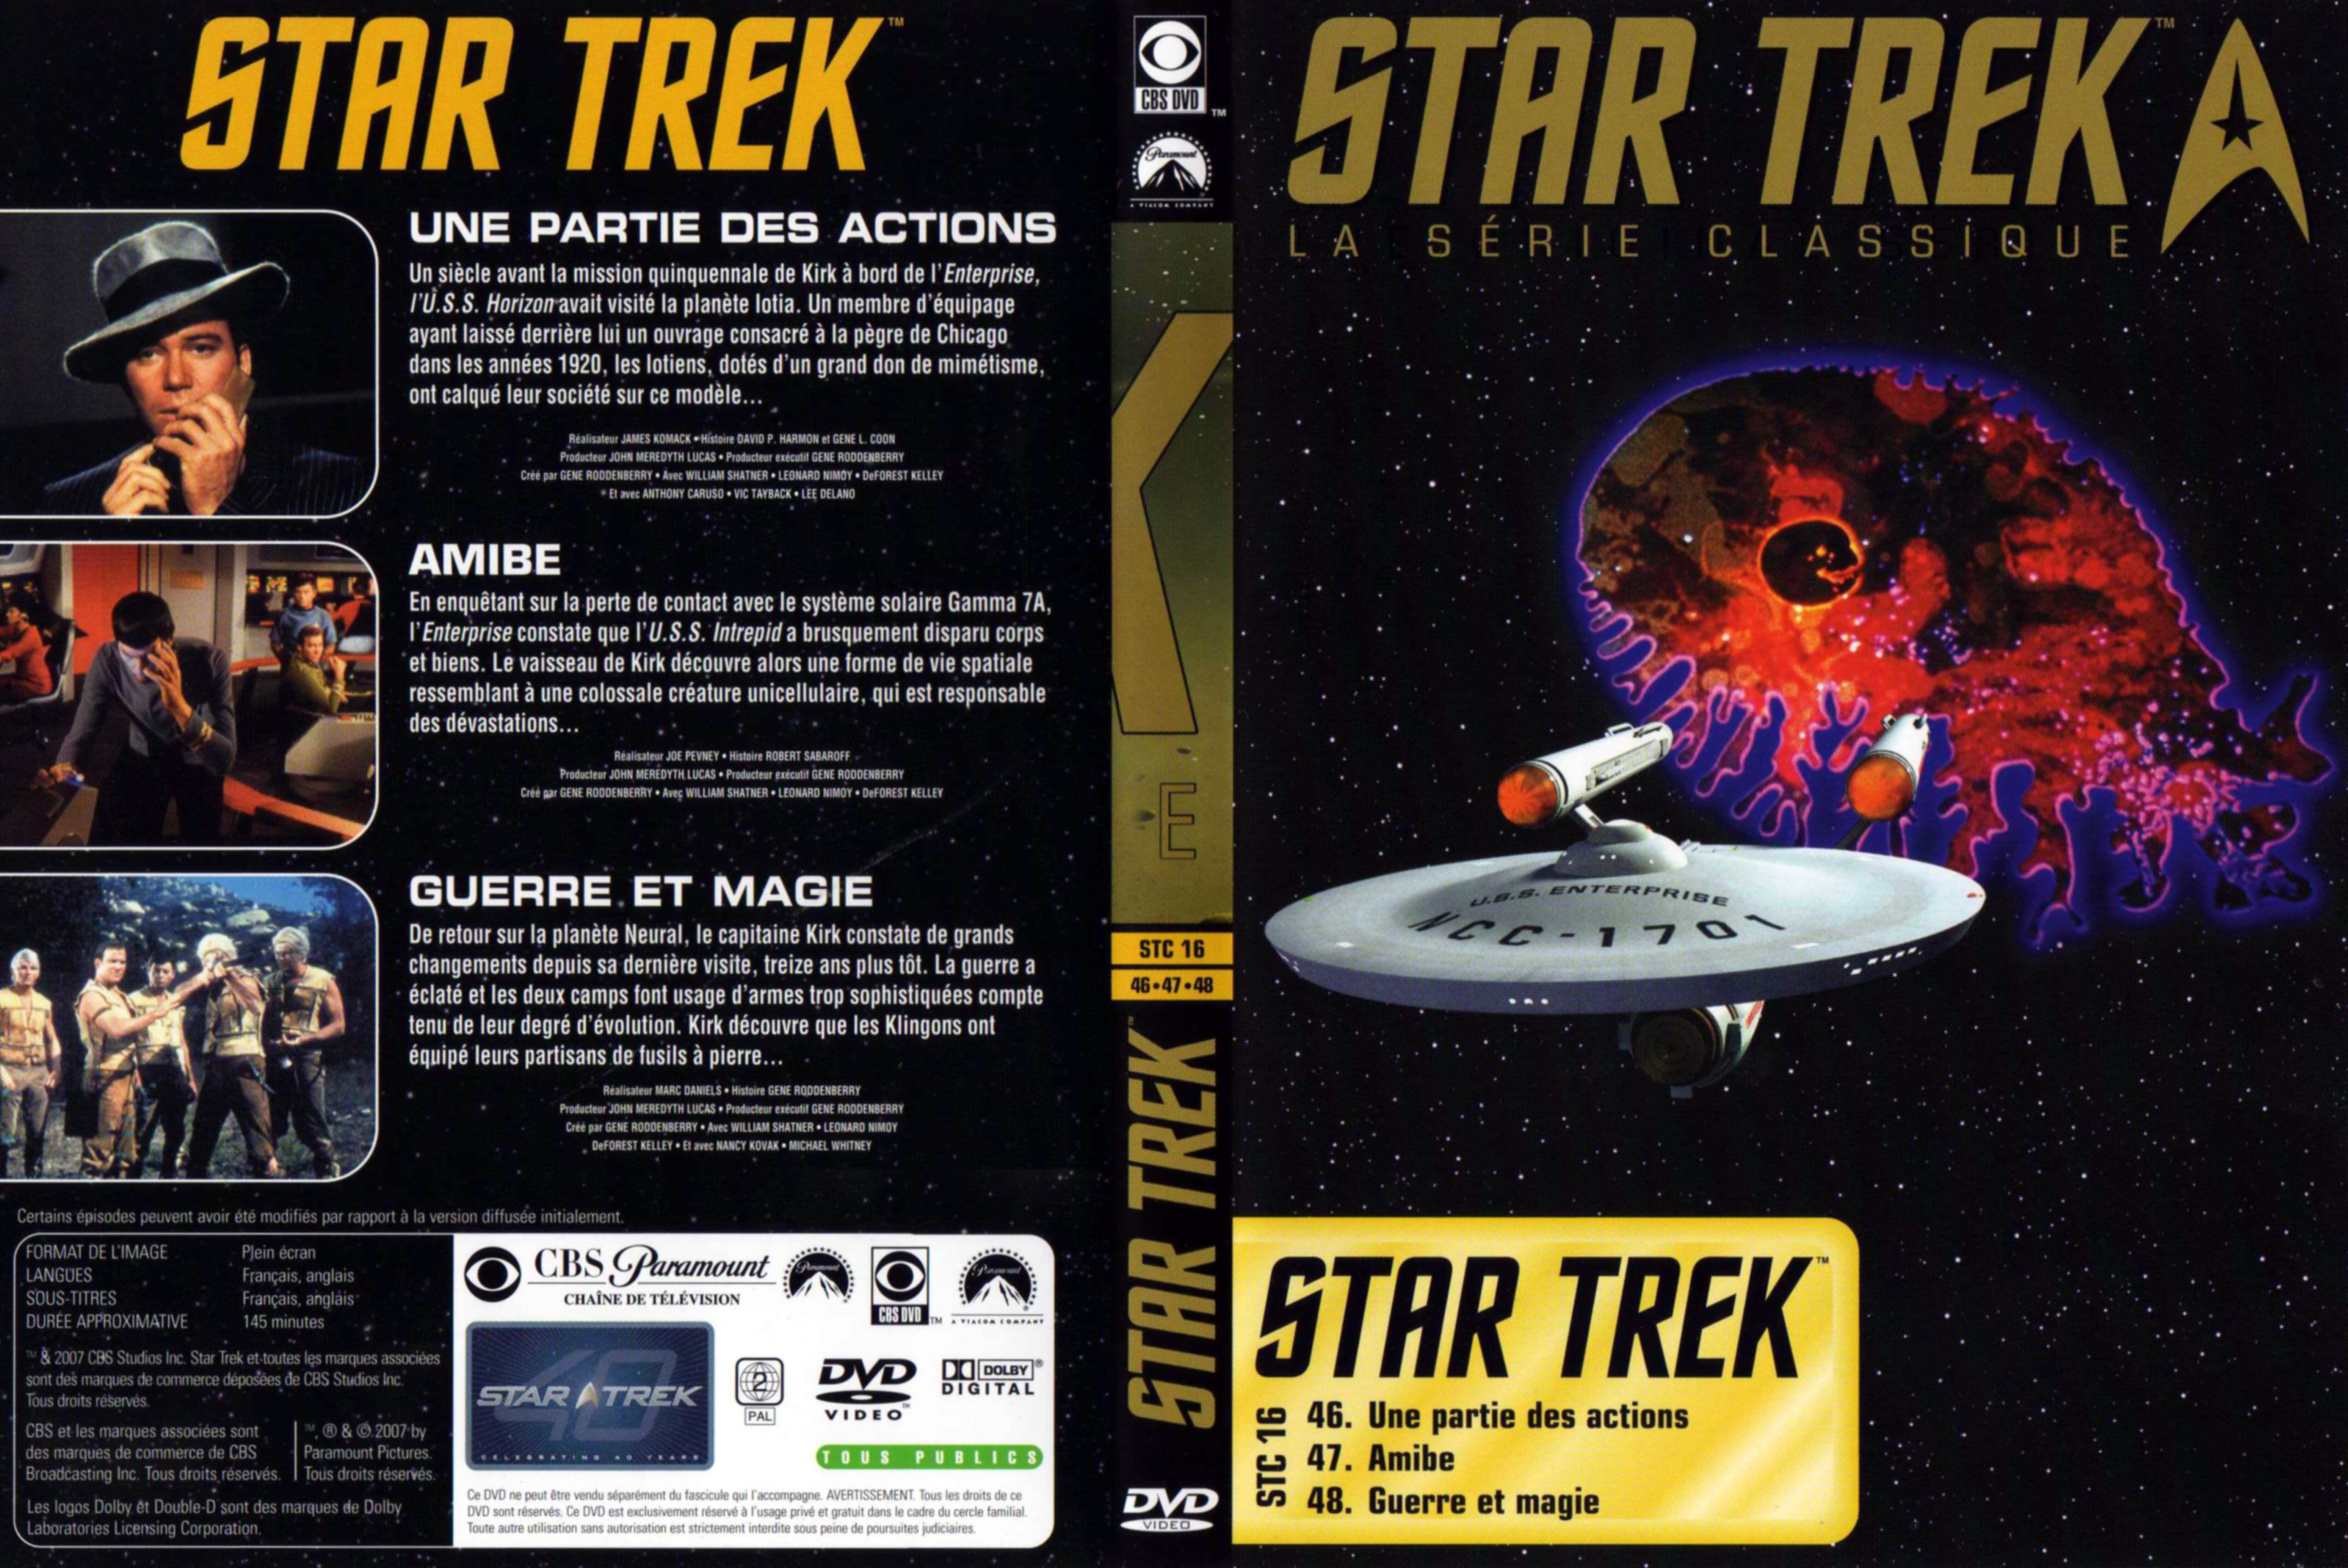 Jaquette DVD Star Trek vol 16